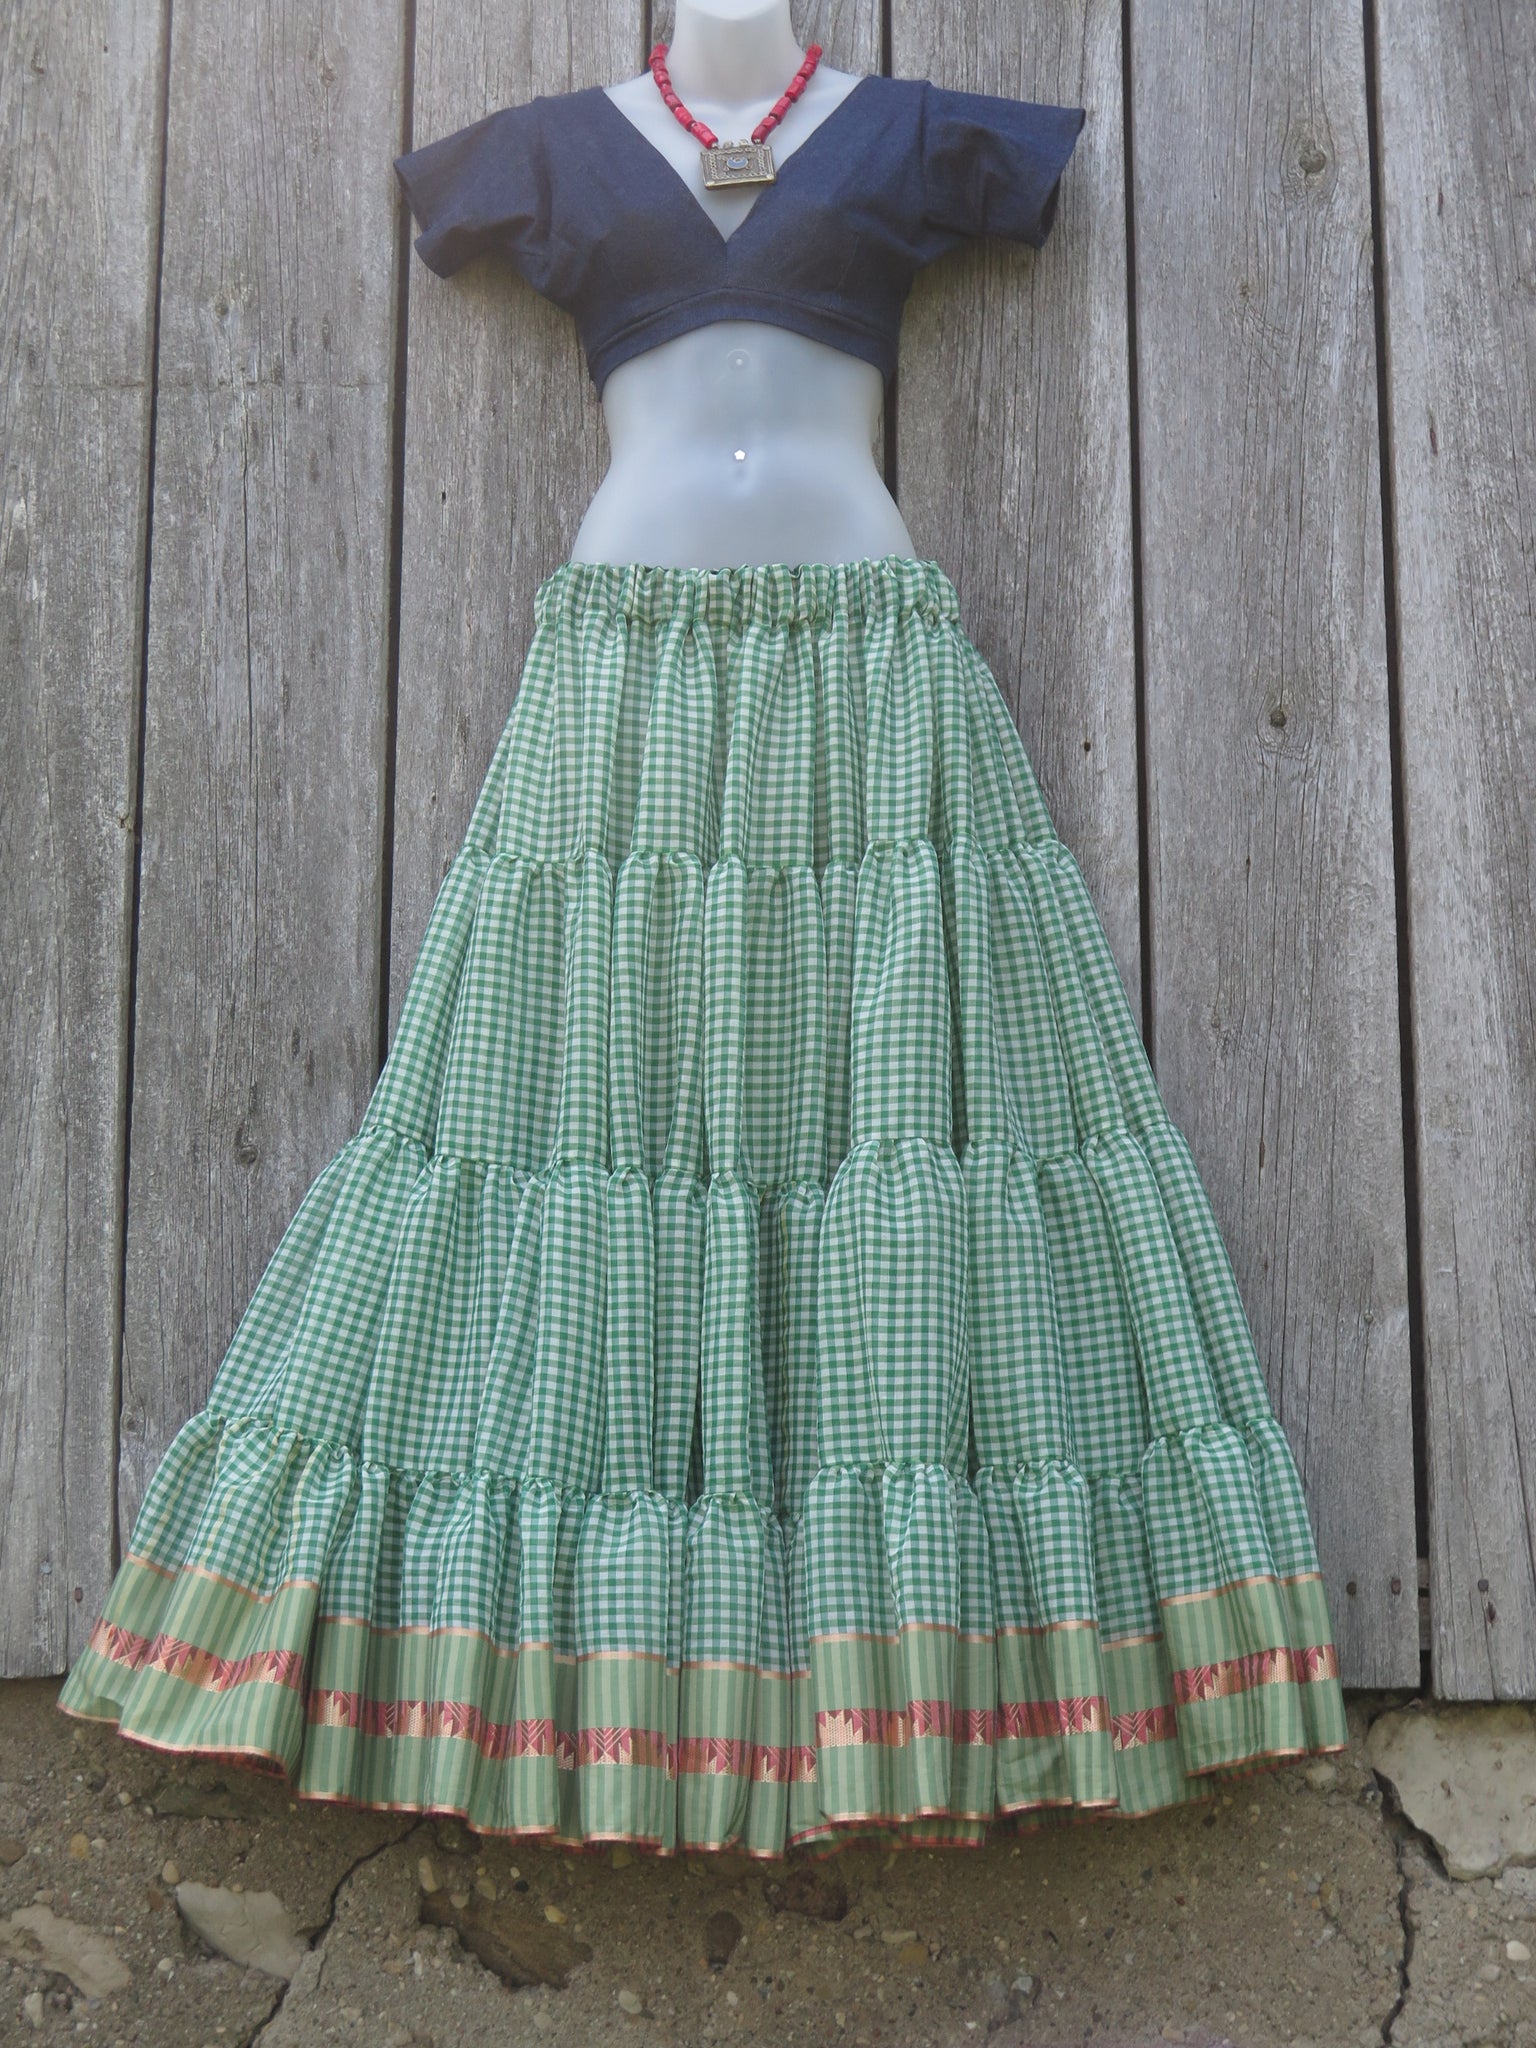 Emerald Green Petticoat Netting